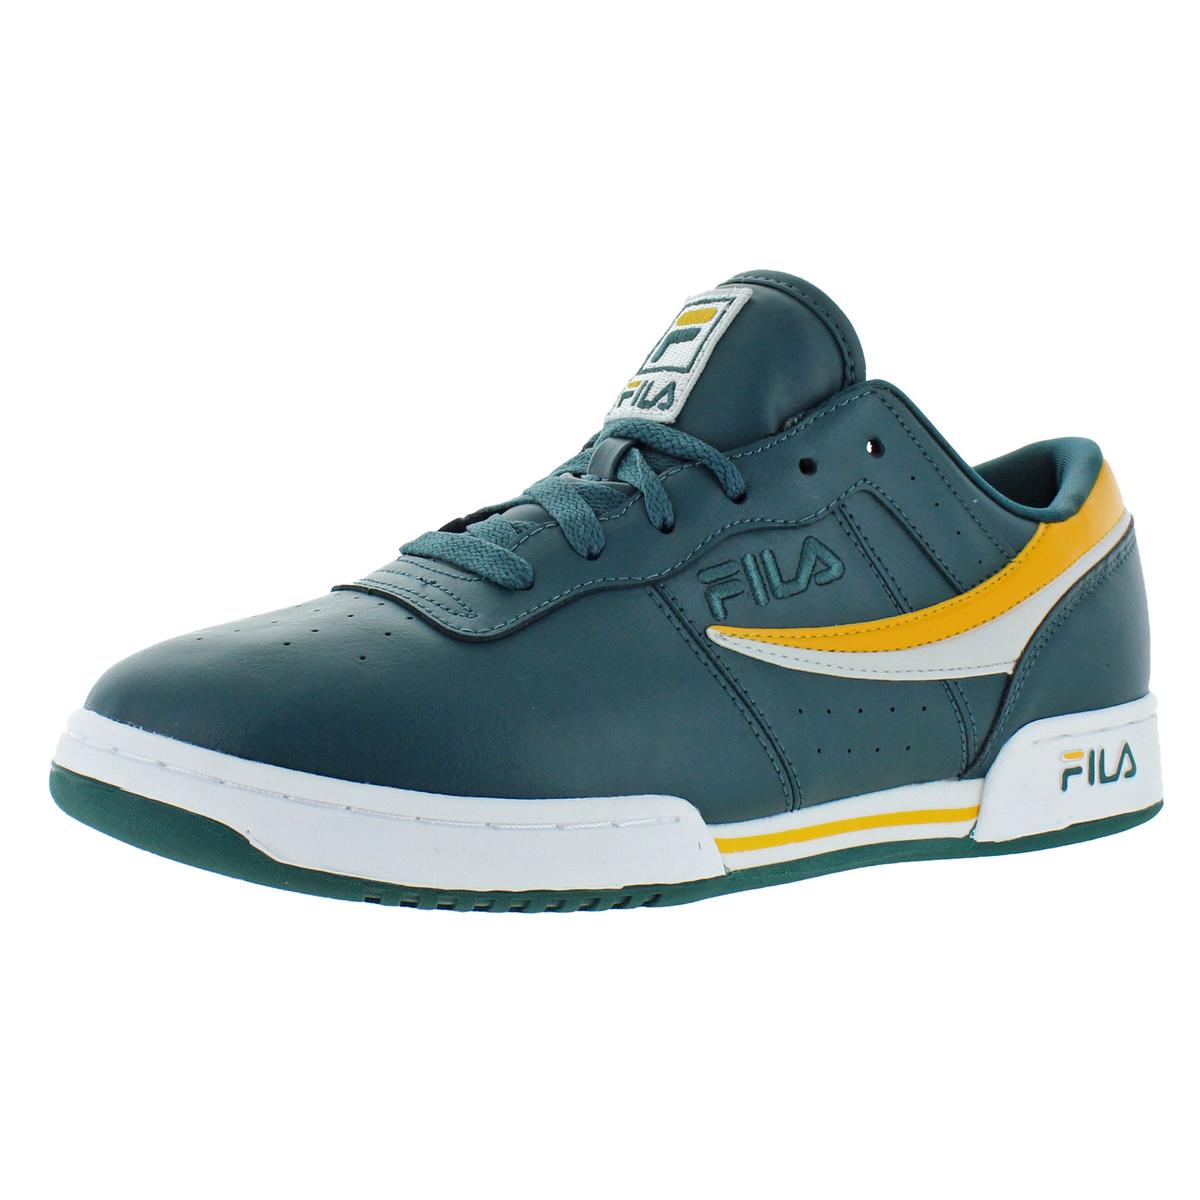 Fila Mens Original Fitness Green Casual Shoes Sneakers 11.5 Medium (D) BHFO 5970 | eBay